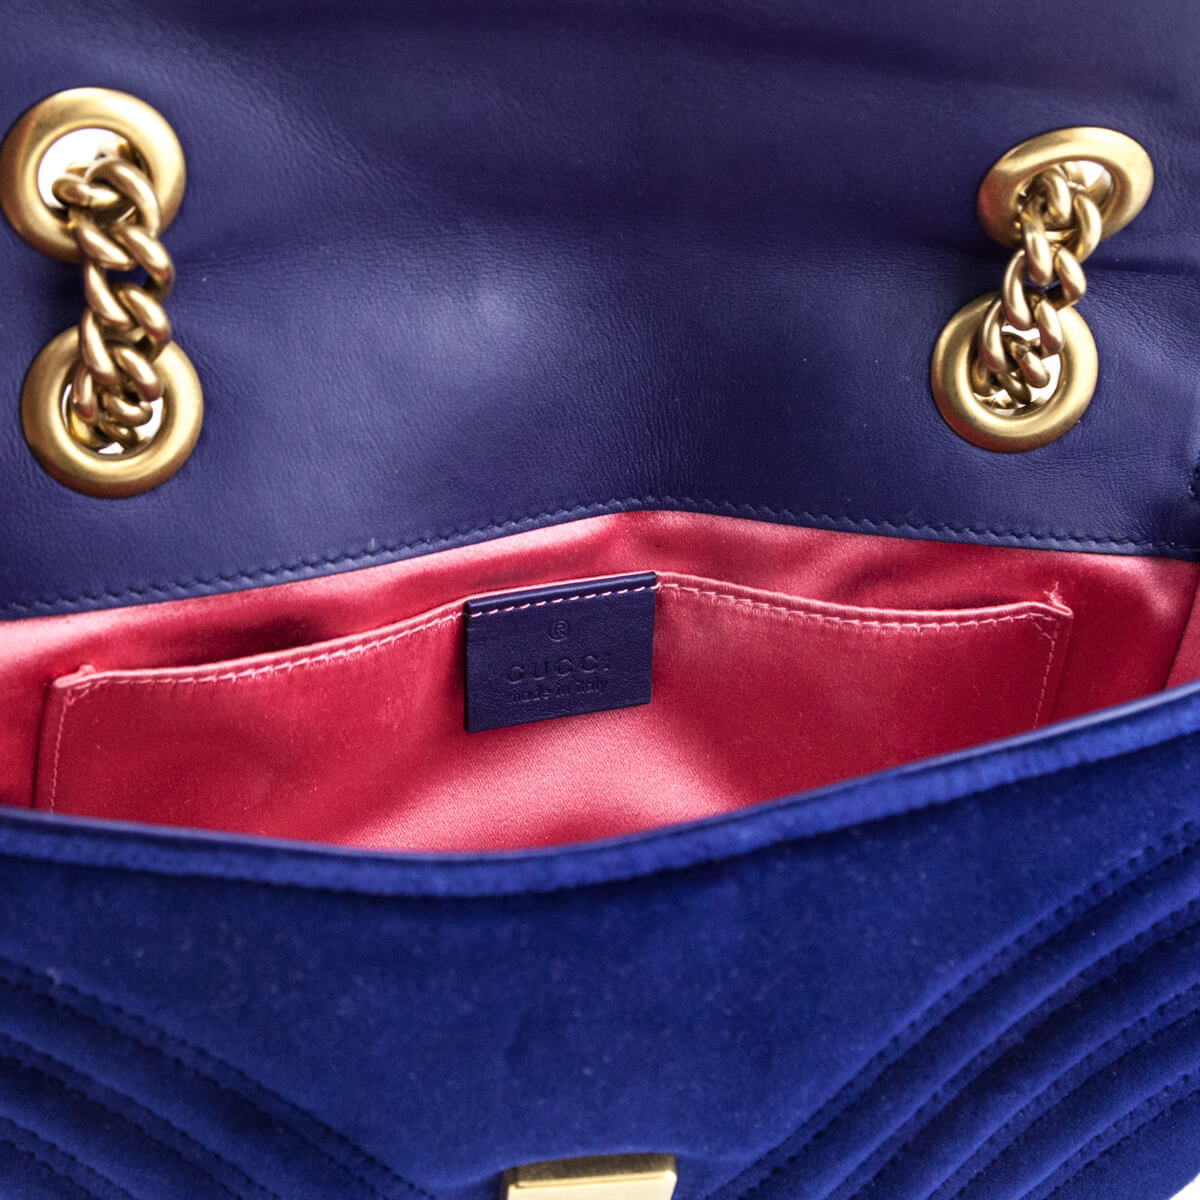 Gucci GG Marmont Shoulder Bag Matelasse Velvet Small Cobalt Blue